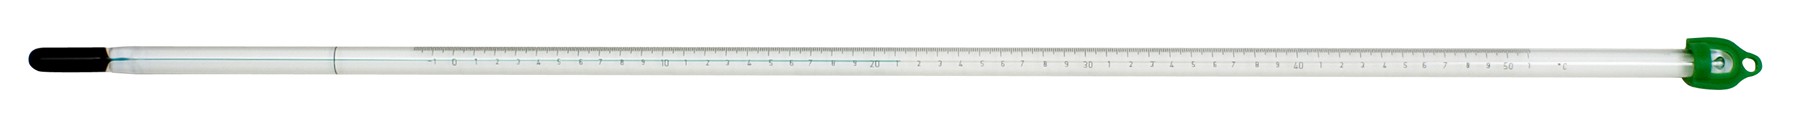 H-B DURAC Plus Precision Liquid-In-Glass Thermometer; 30 to 214F, Total Immersion, Organic Liquid Fill